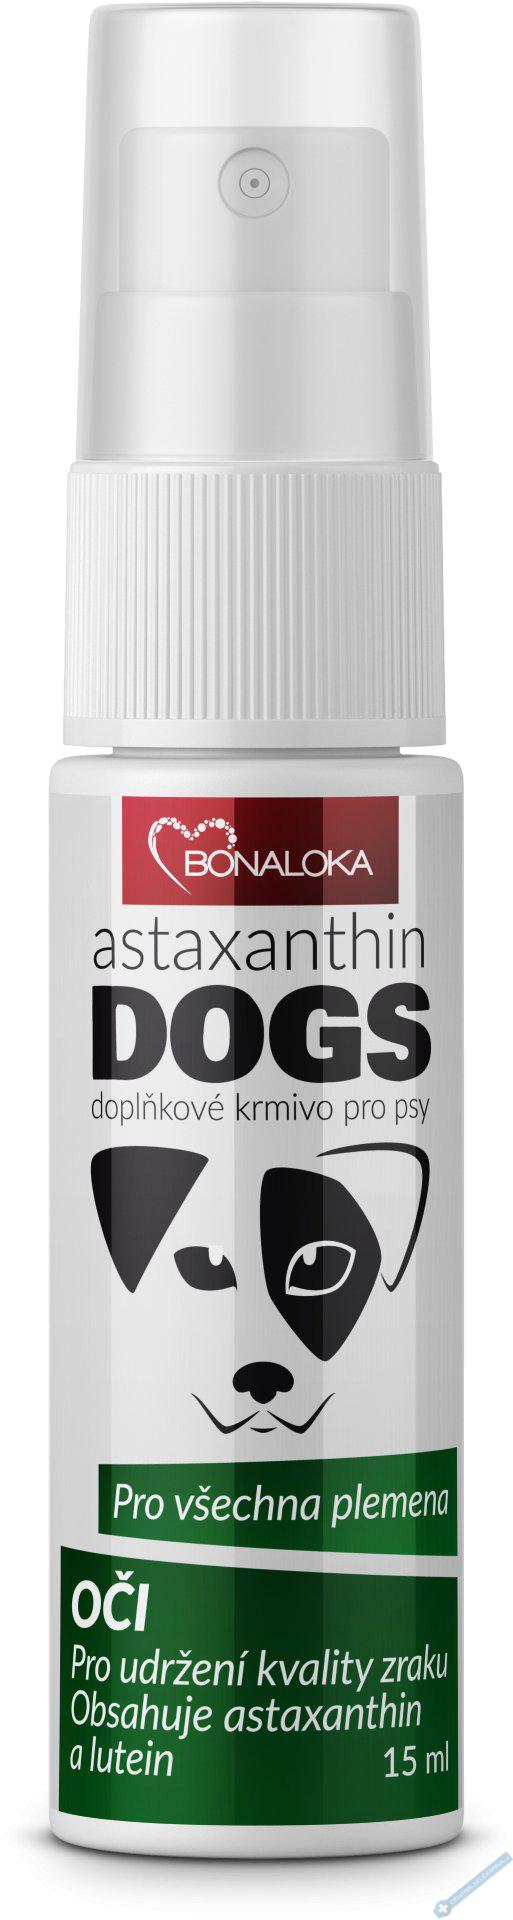 Bonaloka Astaxanthin Dogs Oi